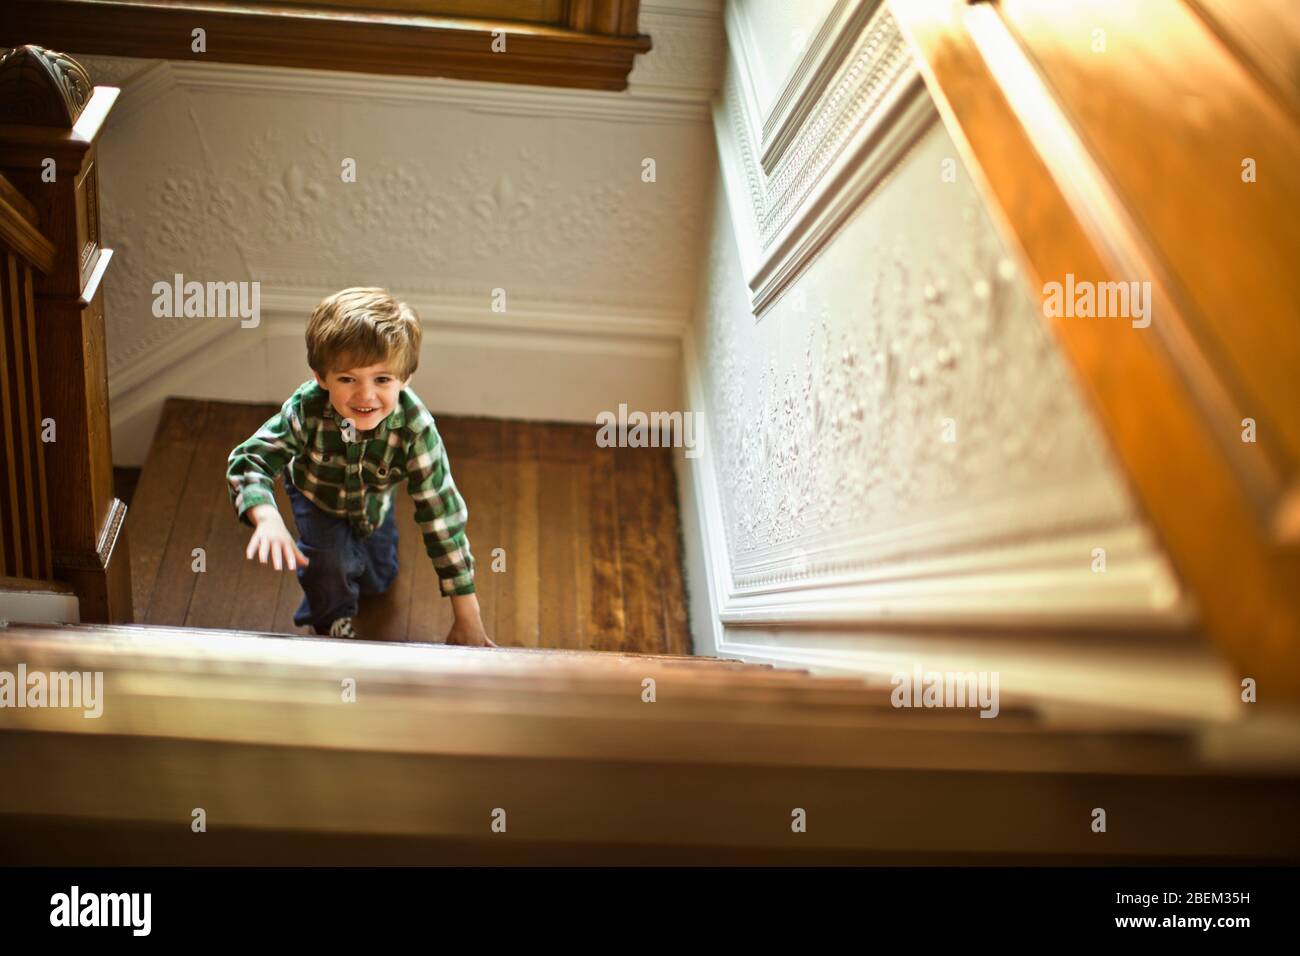 Young boy climbing up a staircase Stock Photo